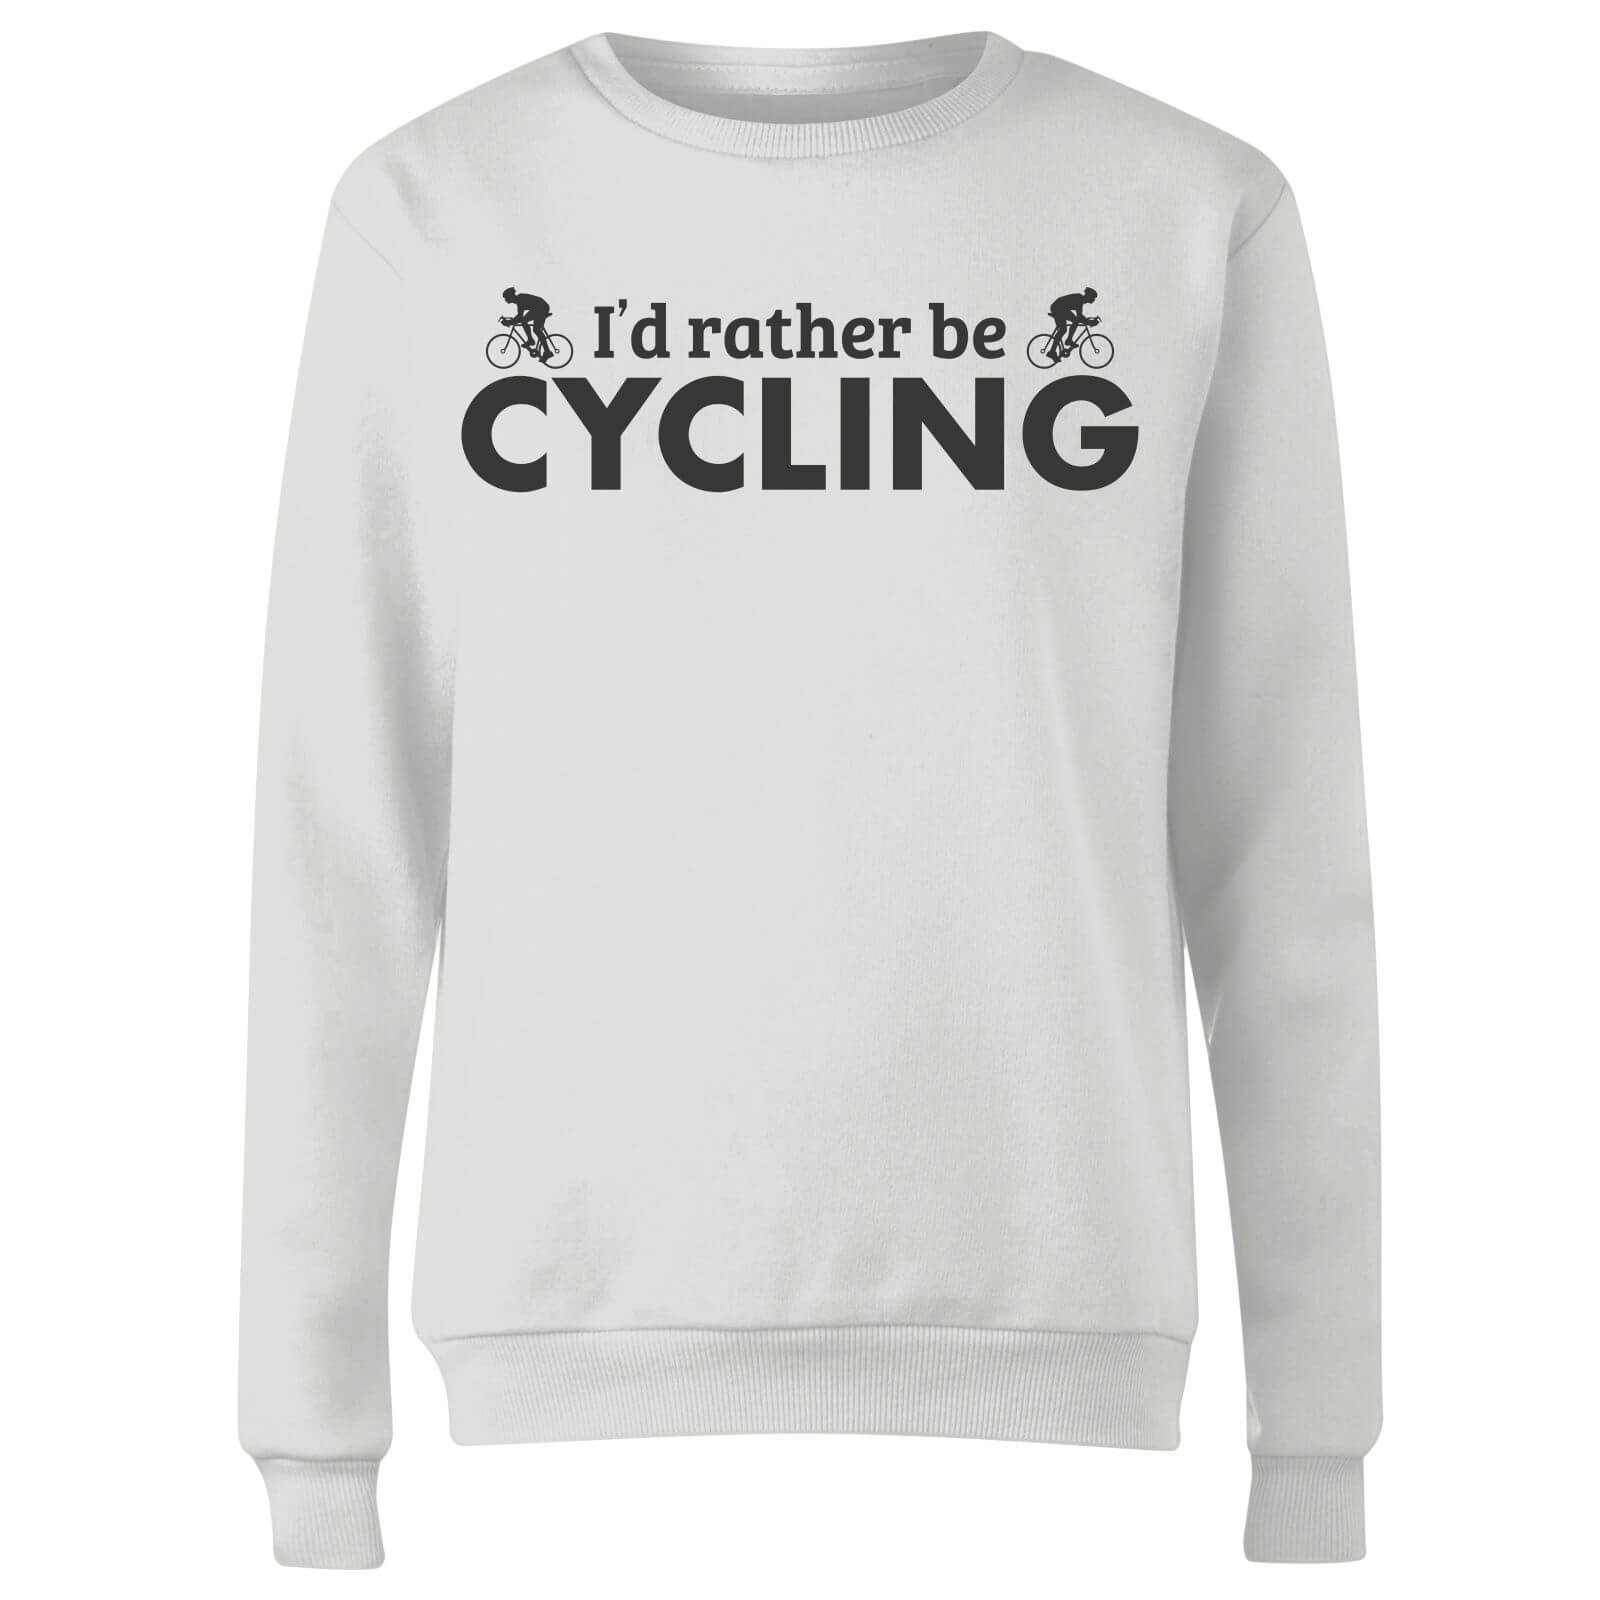 I'd Rather be Cycling Women's Sweatshirt - White - 3XL - White